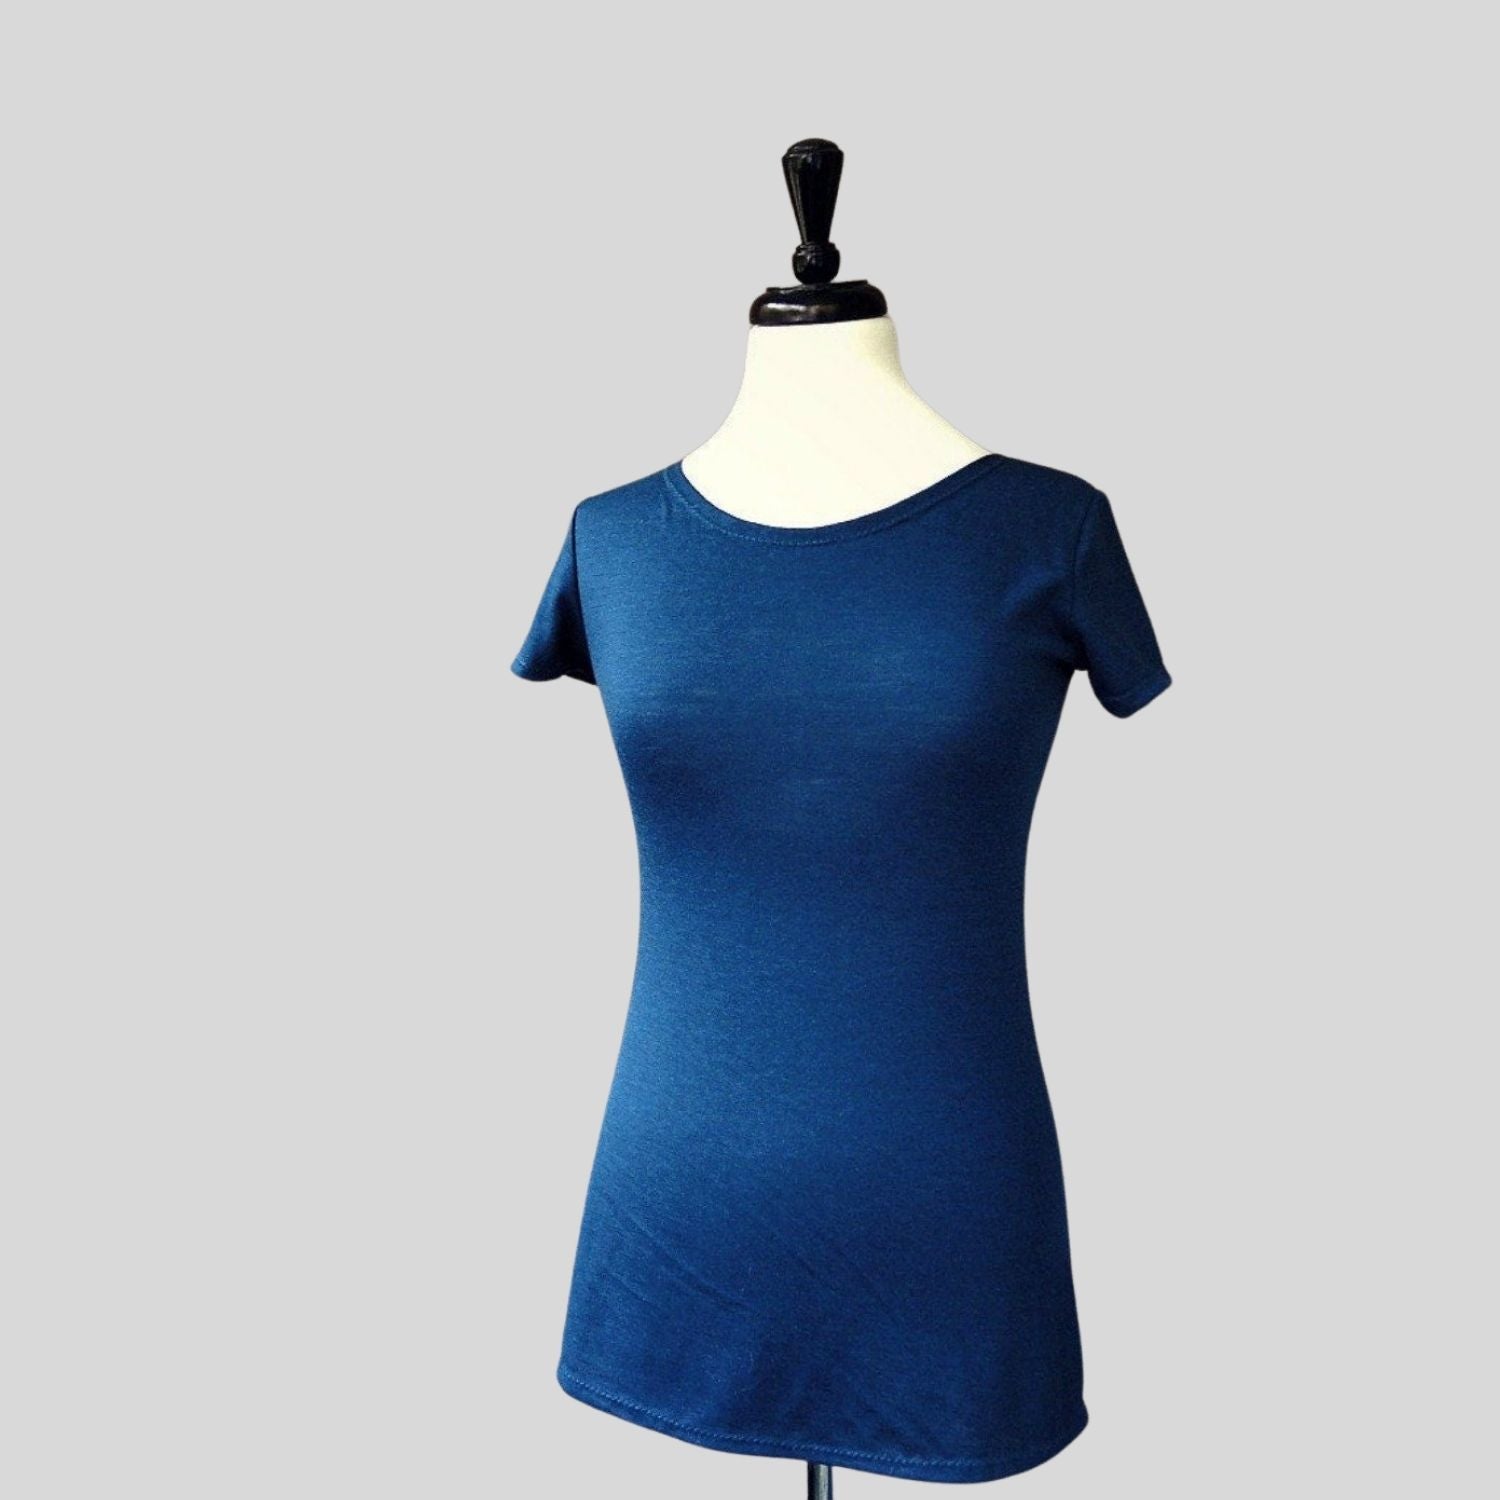 Women's wool t-shirt  Buy merino wool tops for women made in